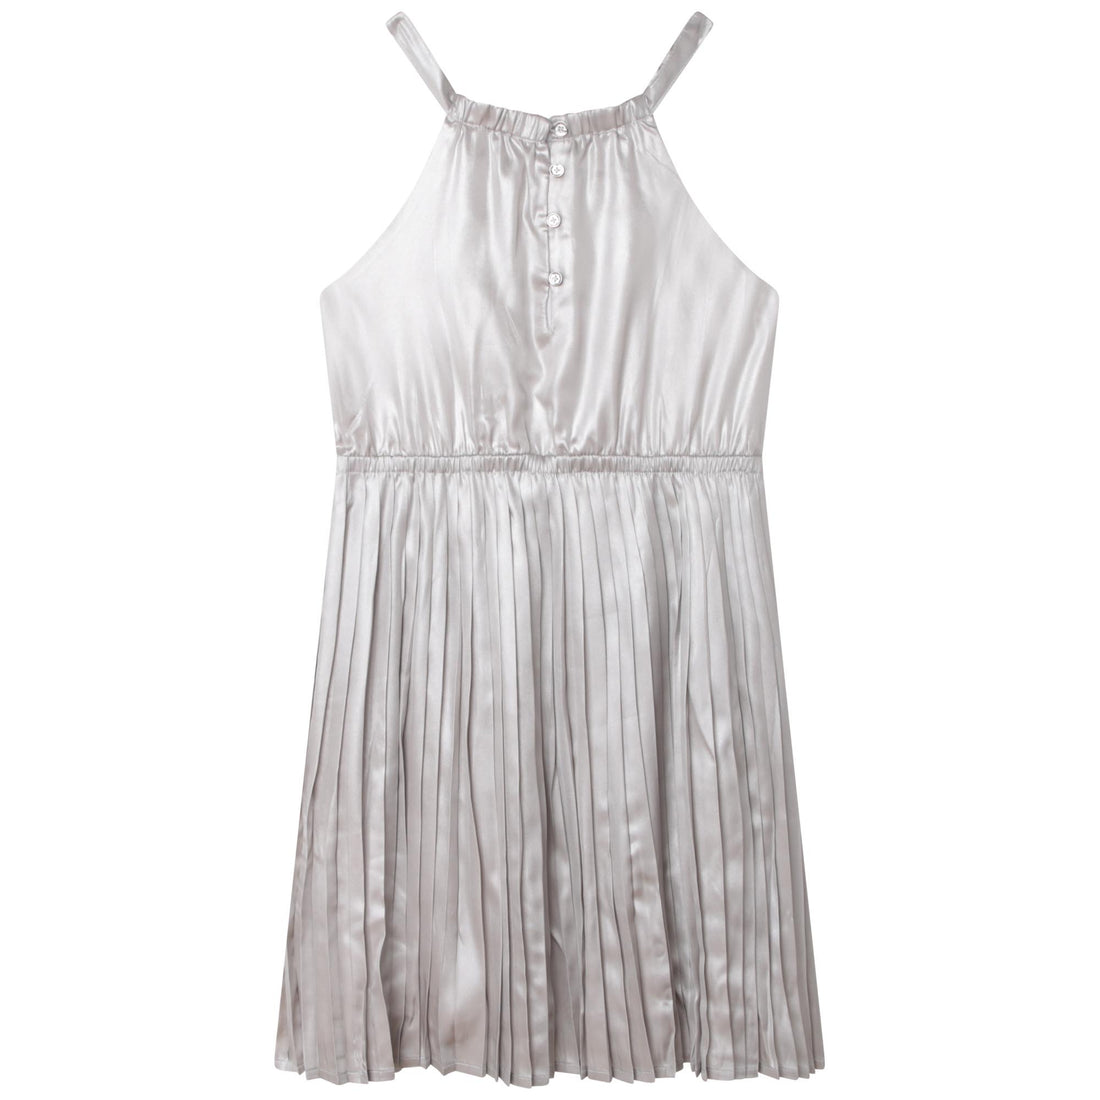 Michael Kors Sleeveless Dress Style: R12144